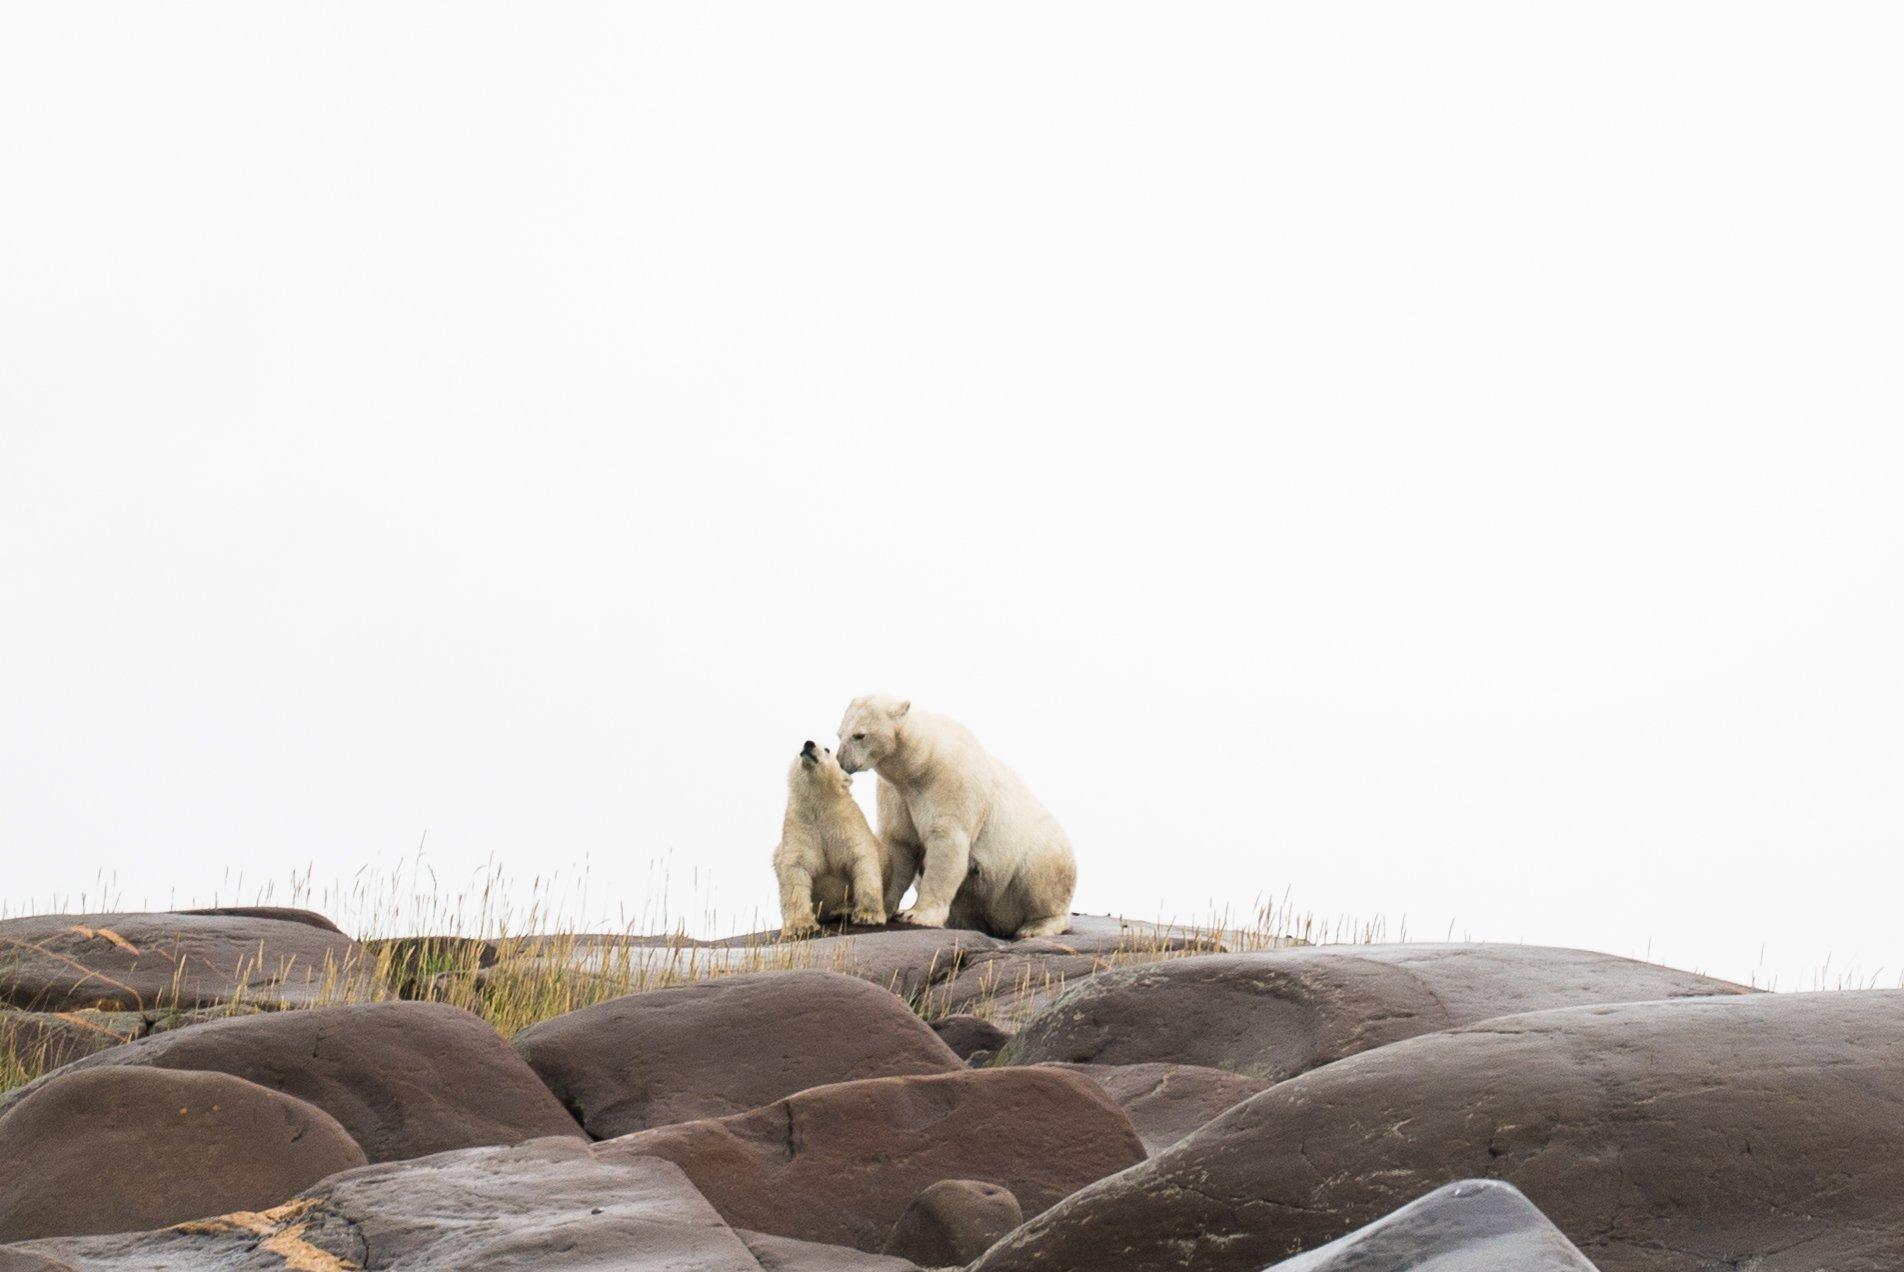 Two polar bears sit on the rocks